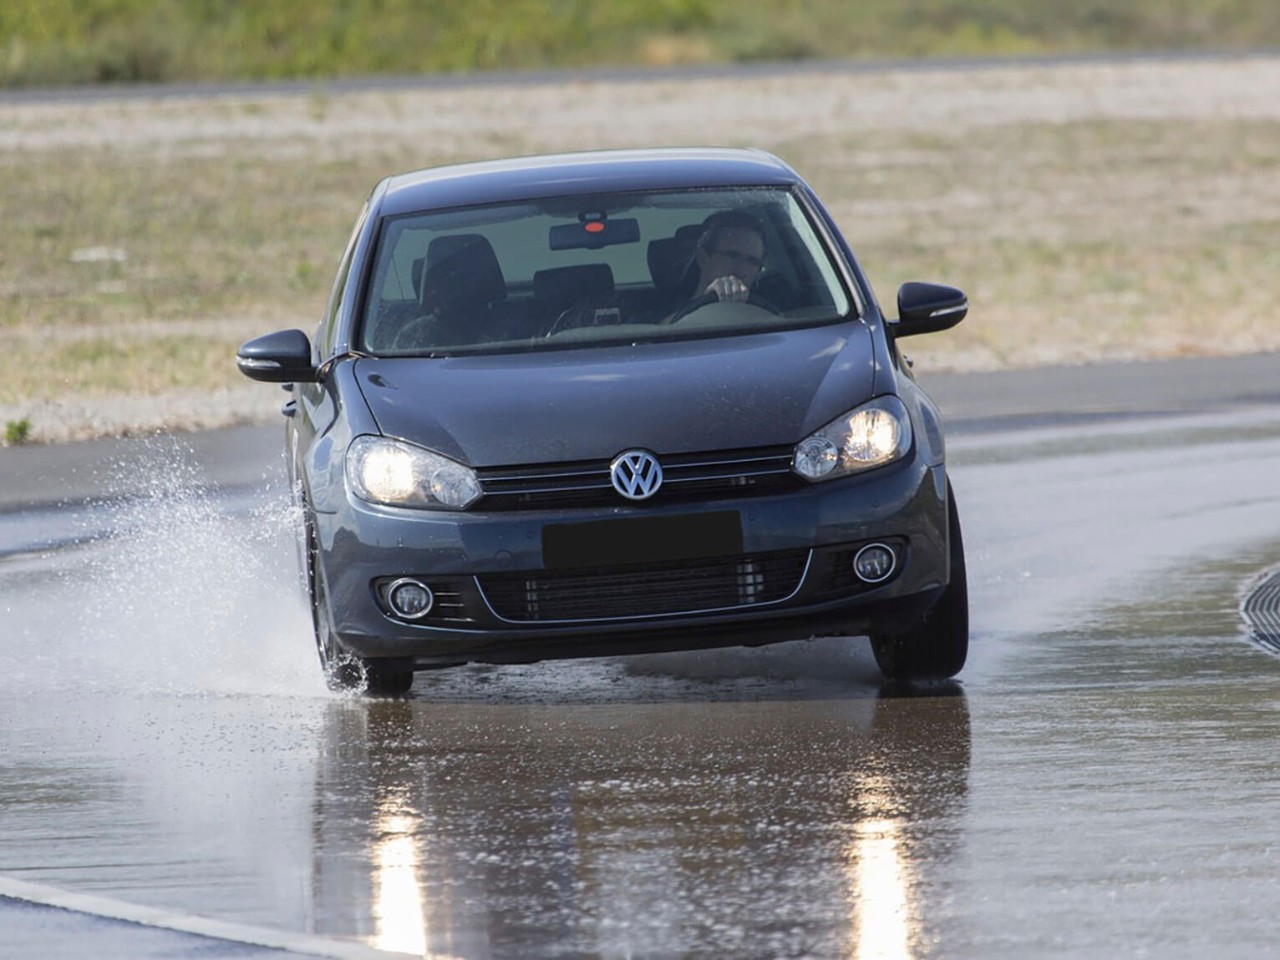 VW car, Dunlop Tyres on wet track